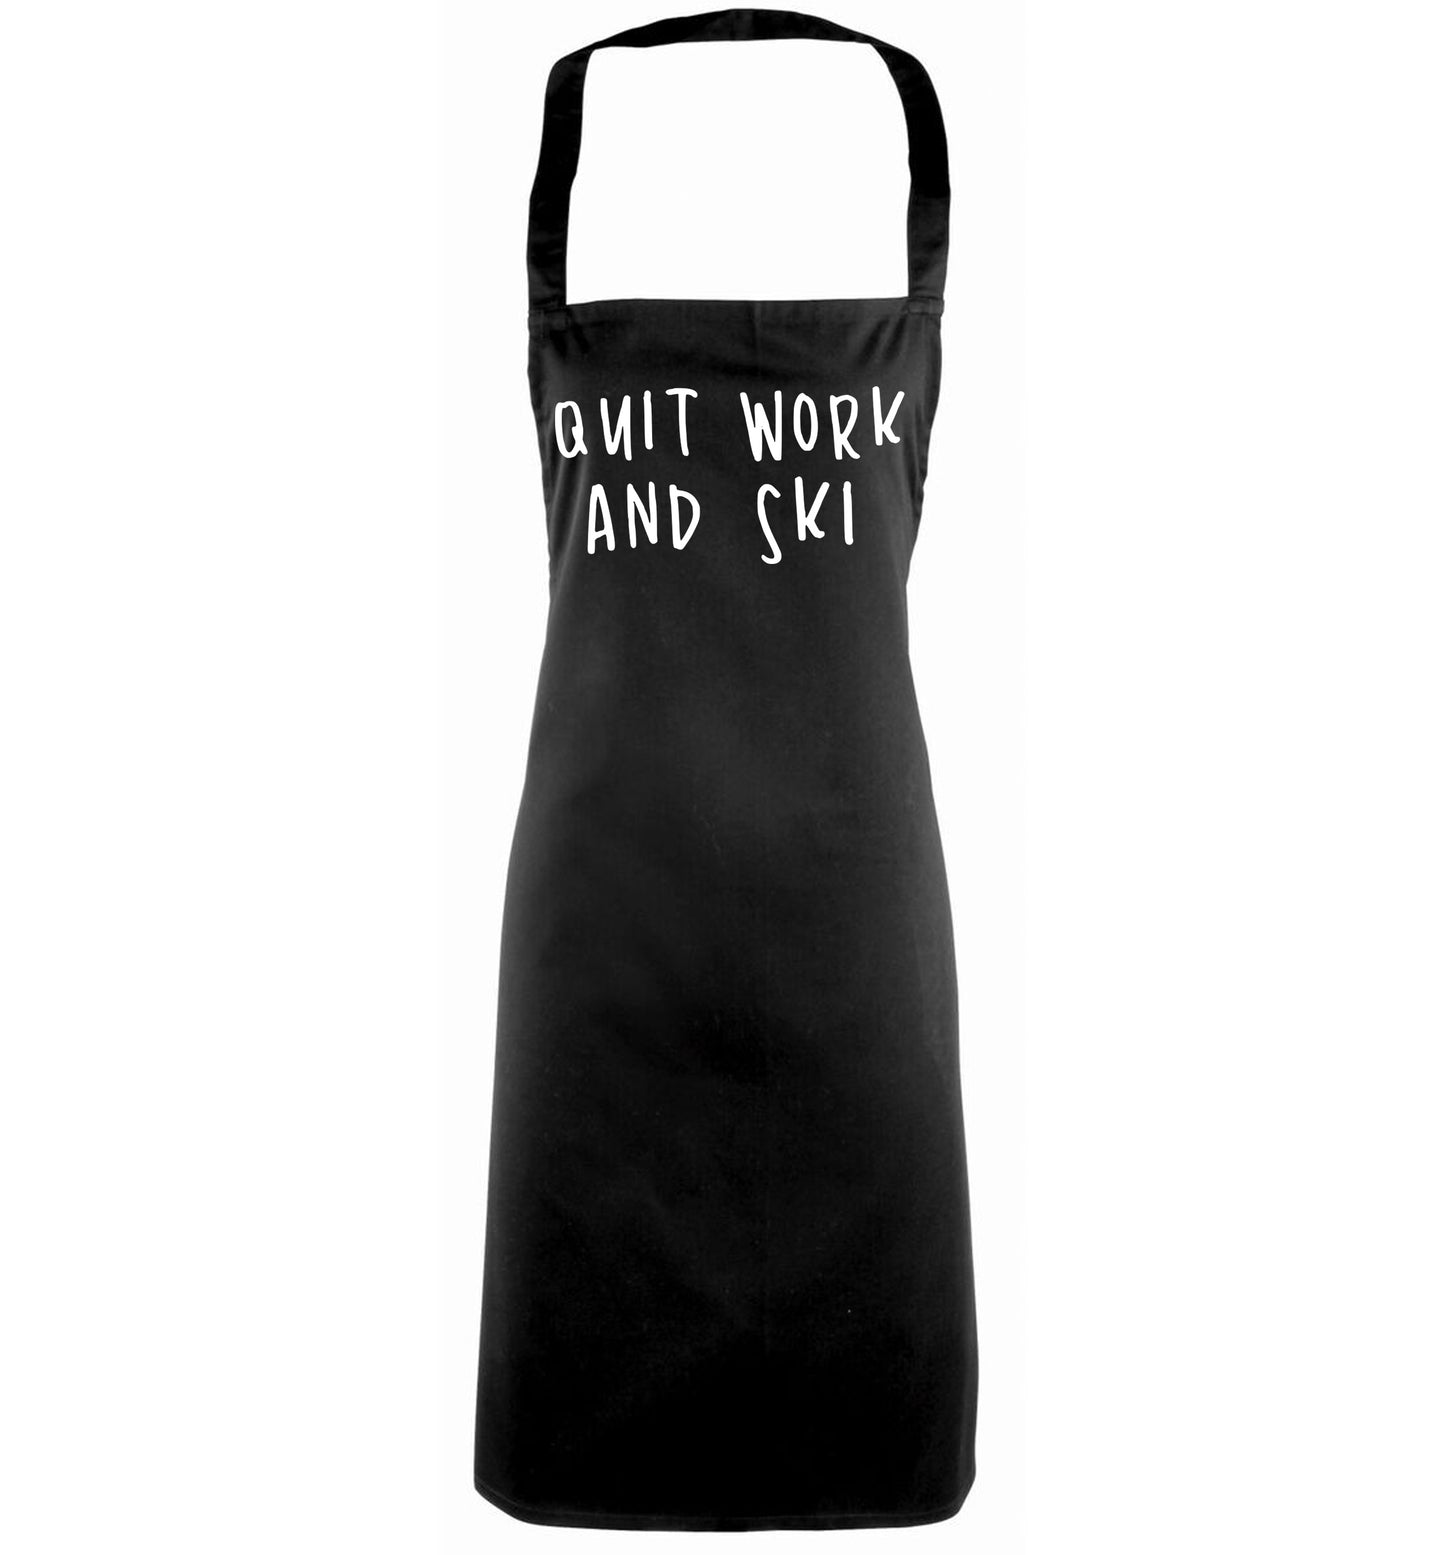 Quit work and ski black apron